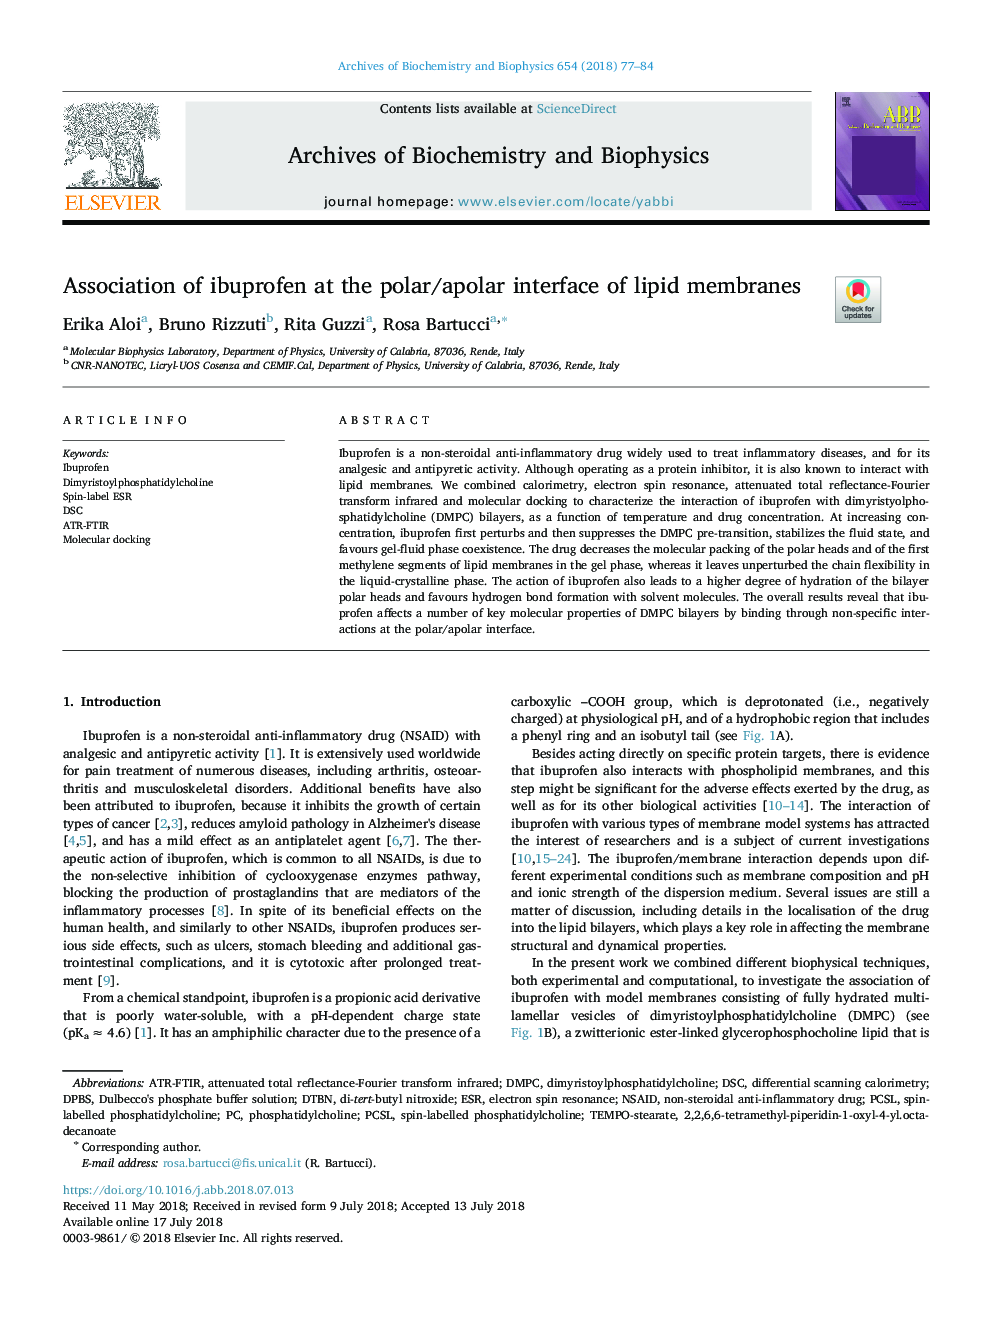 Association of ibuprofen at the polar/apolar interface of lipid membranes